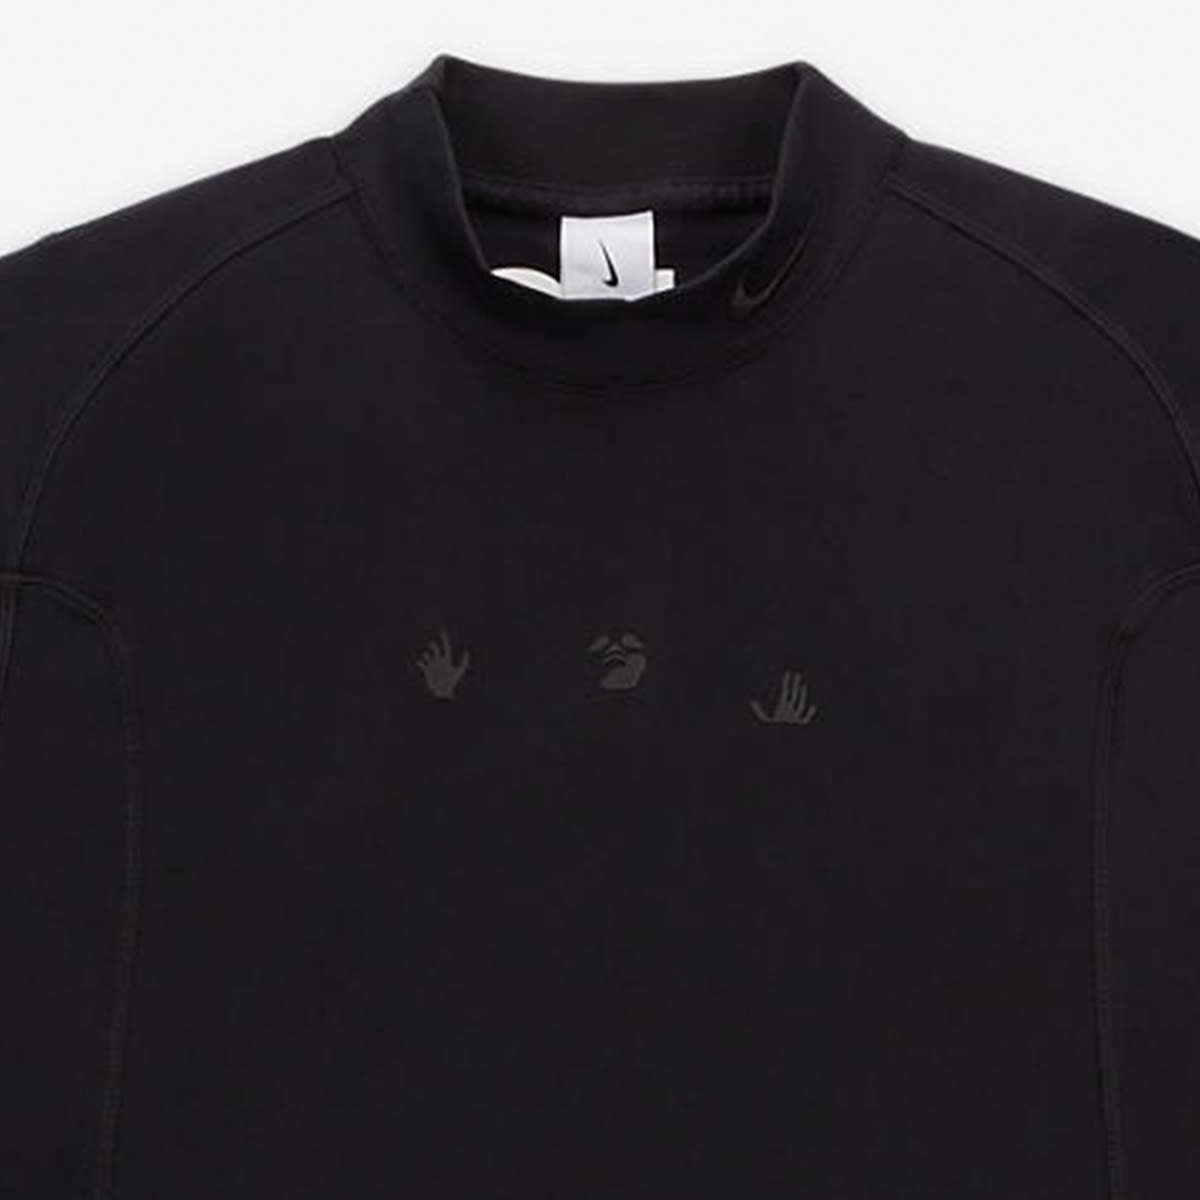 Nike x OFF-WHITE Mc T-Shirt (Black) | END. Launches